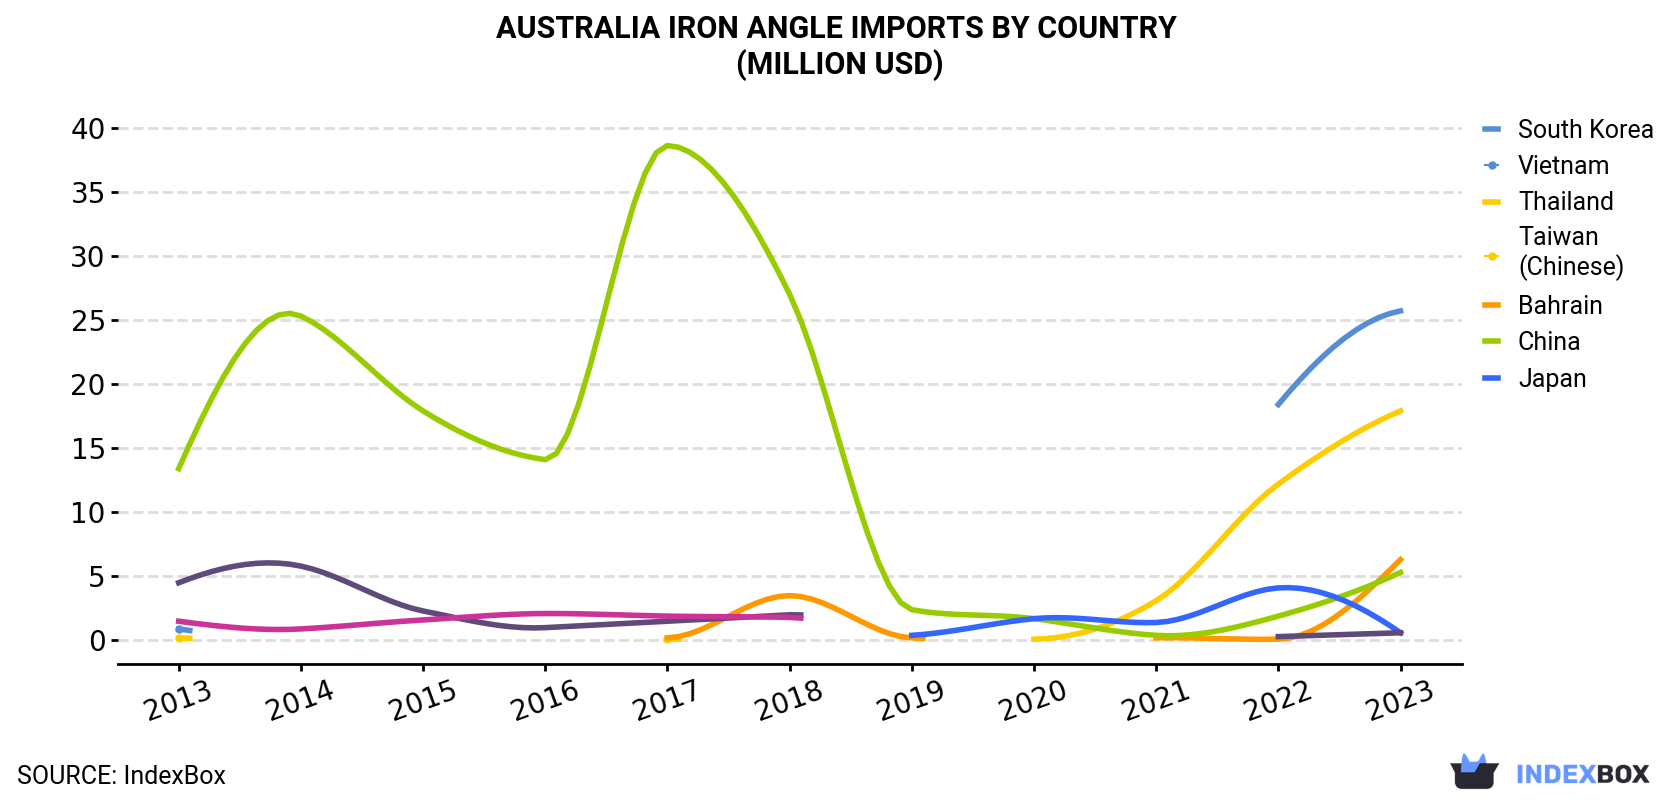 Australia Iron Angle Imports By Country (Million USD)